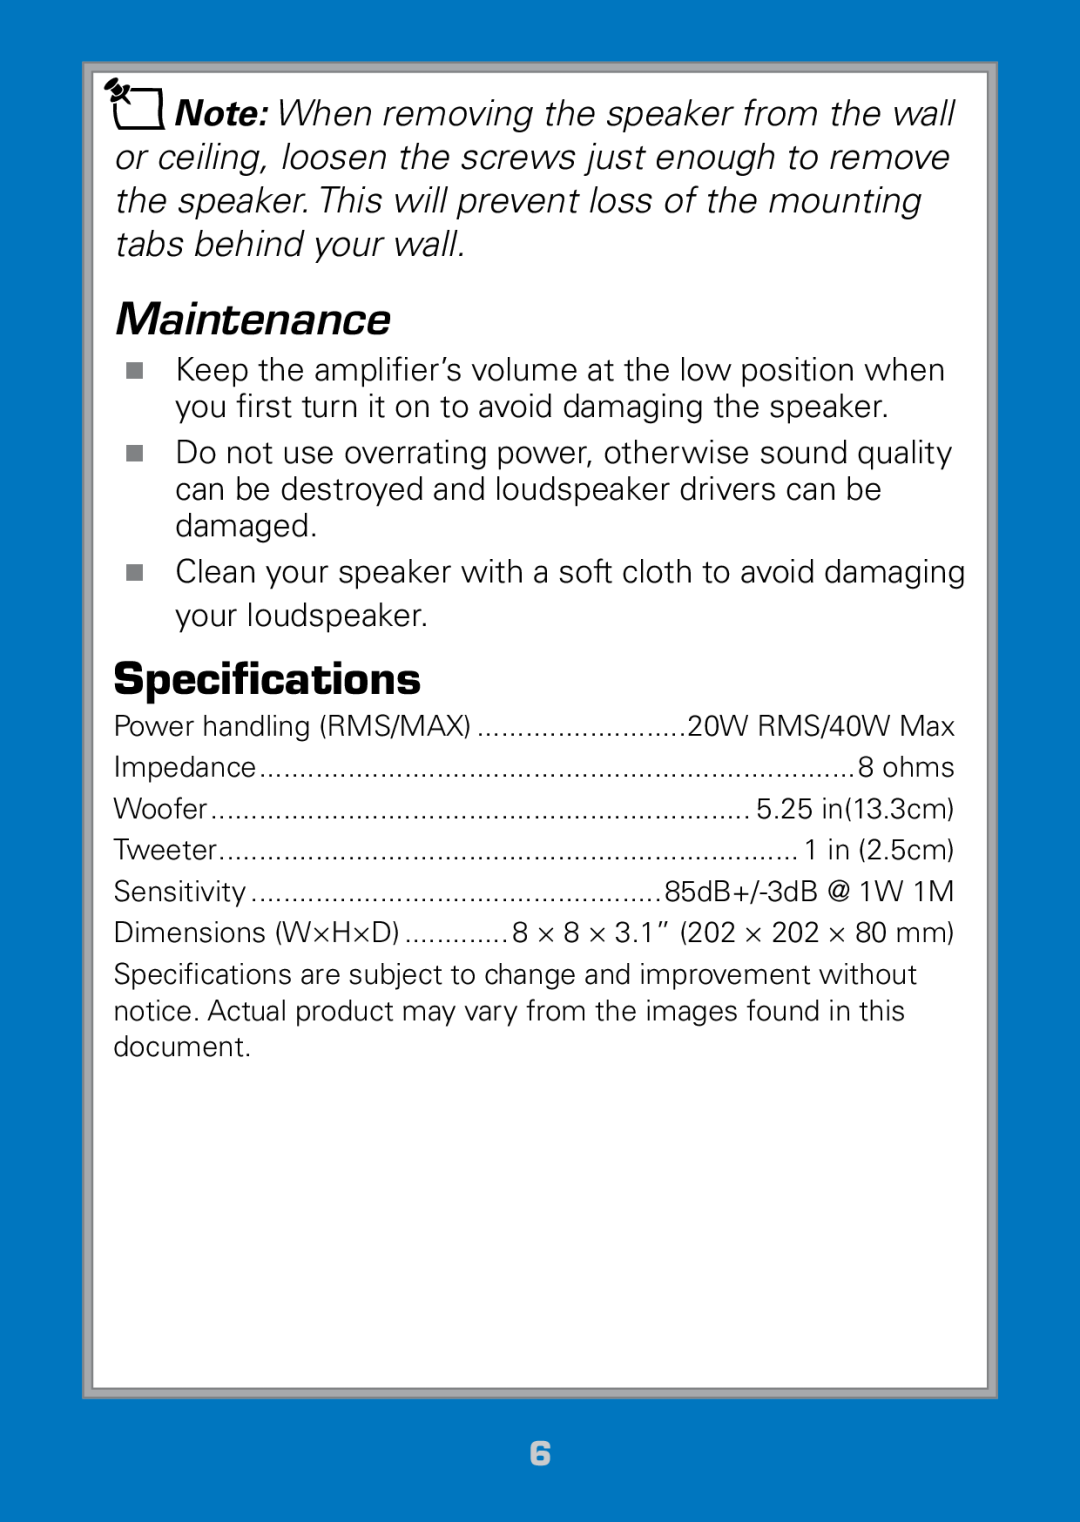 Radio Shack 40-289 manual Maintenance, Specifications 